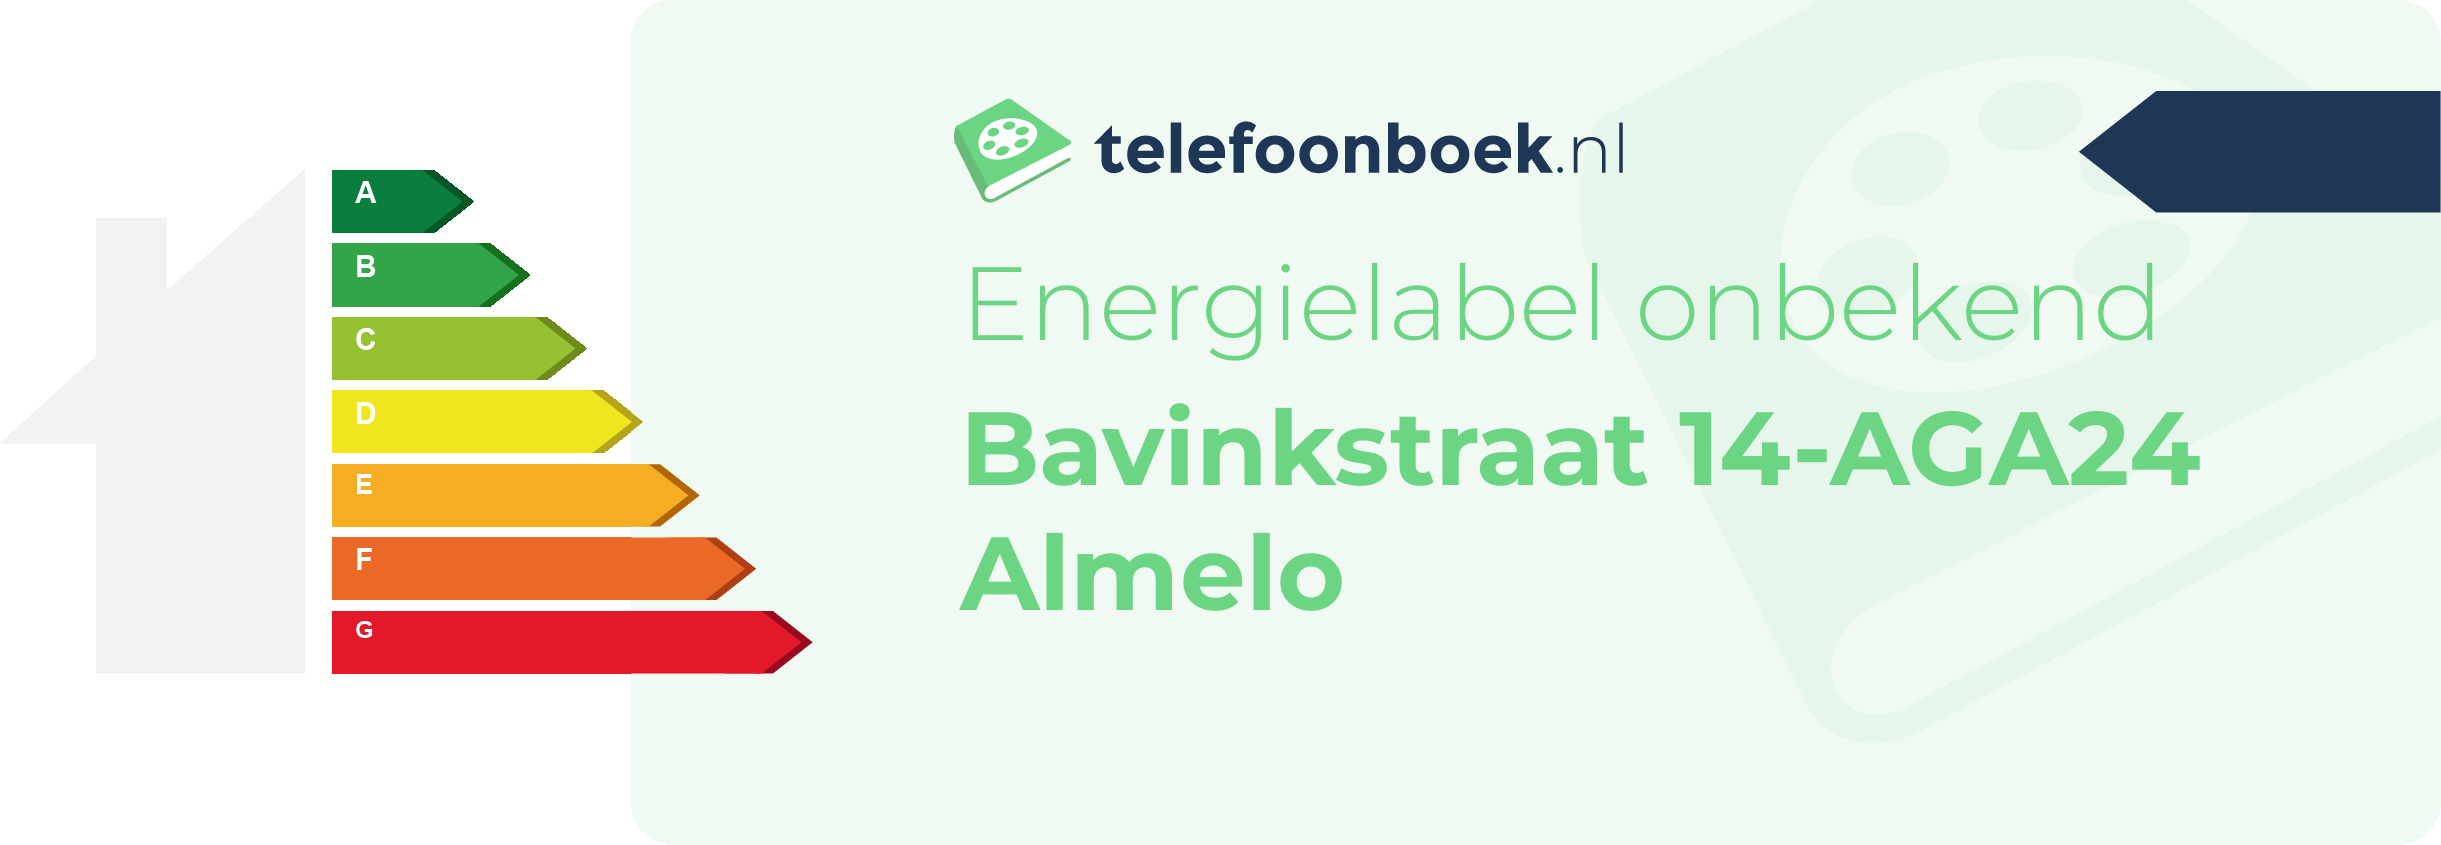 Energielabel Bavinkstraat 14-AGA24 Almelo